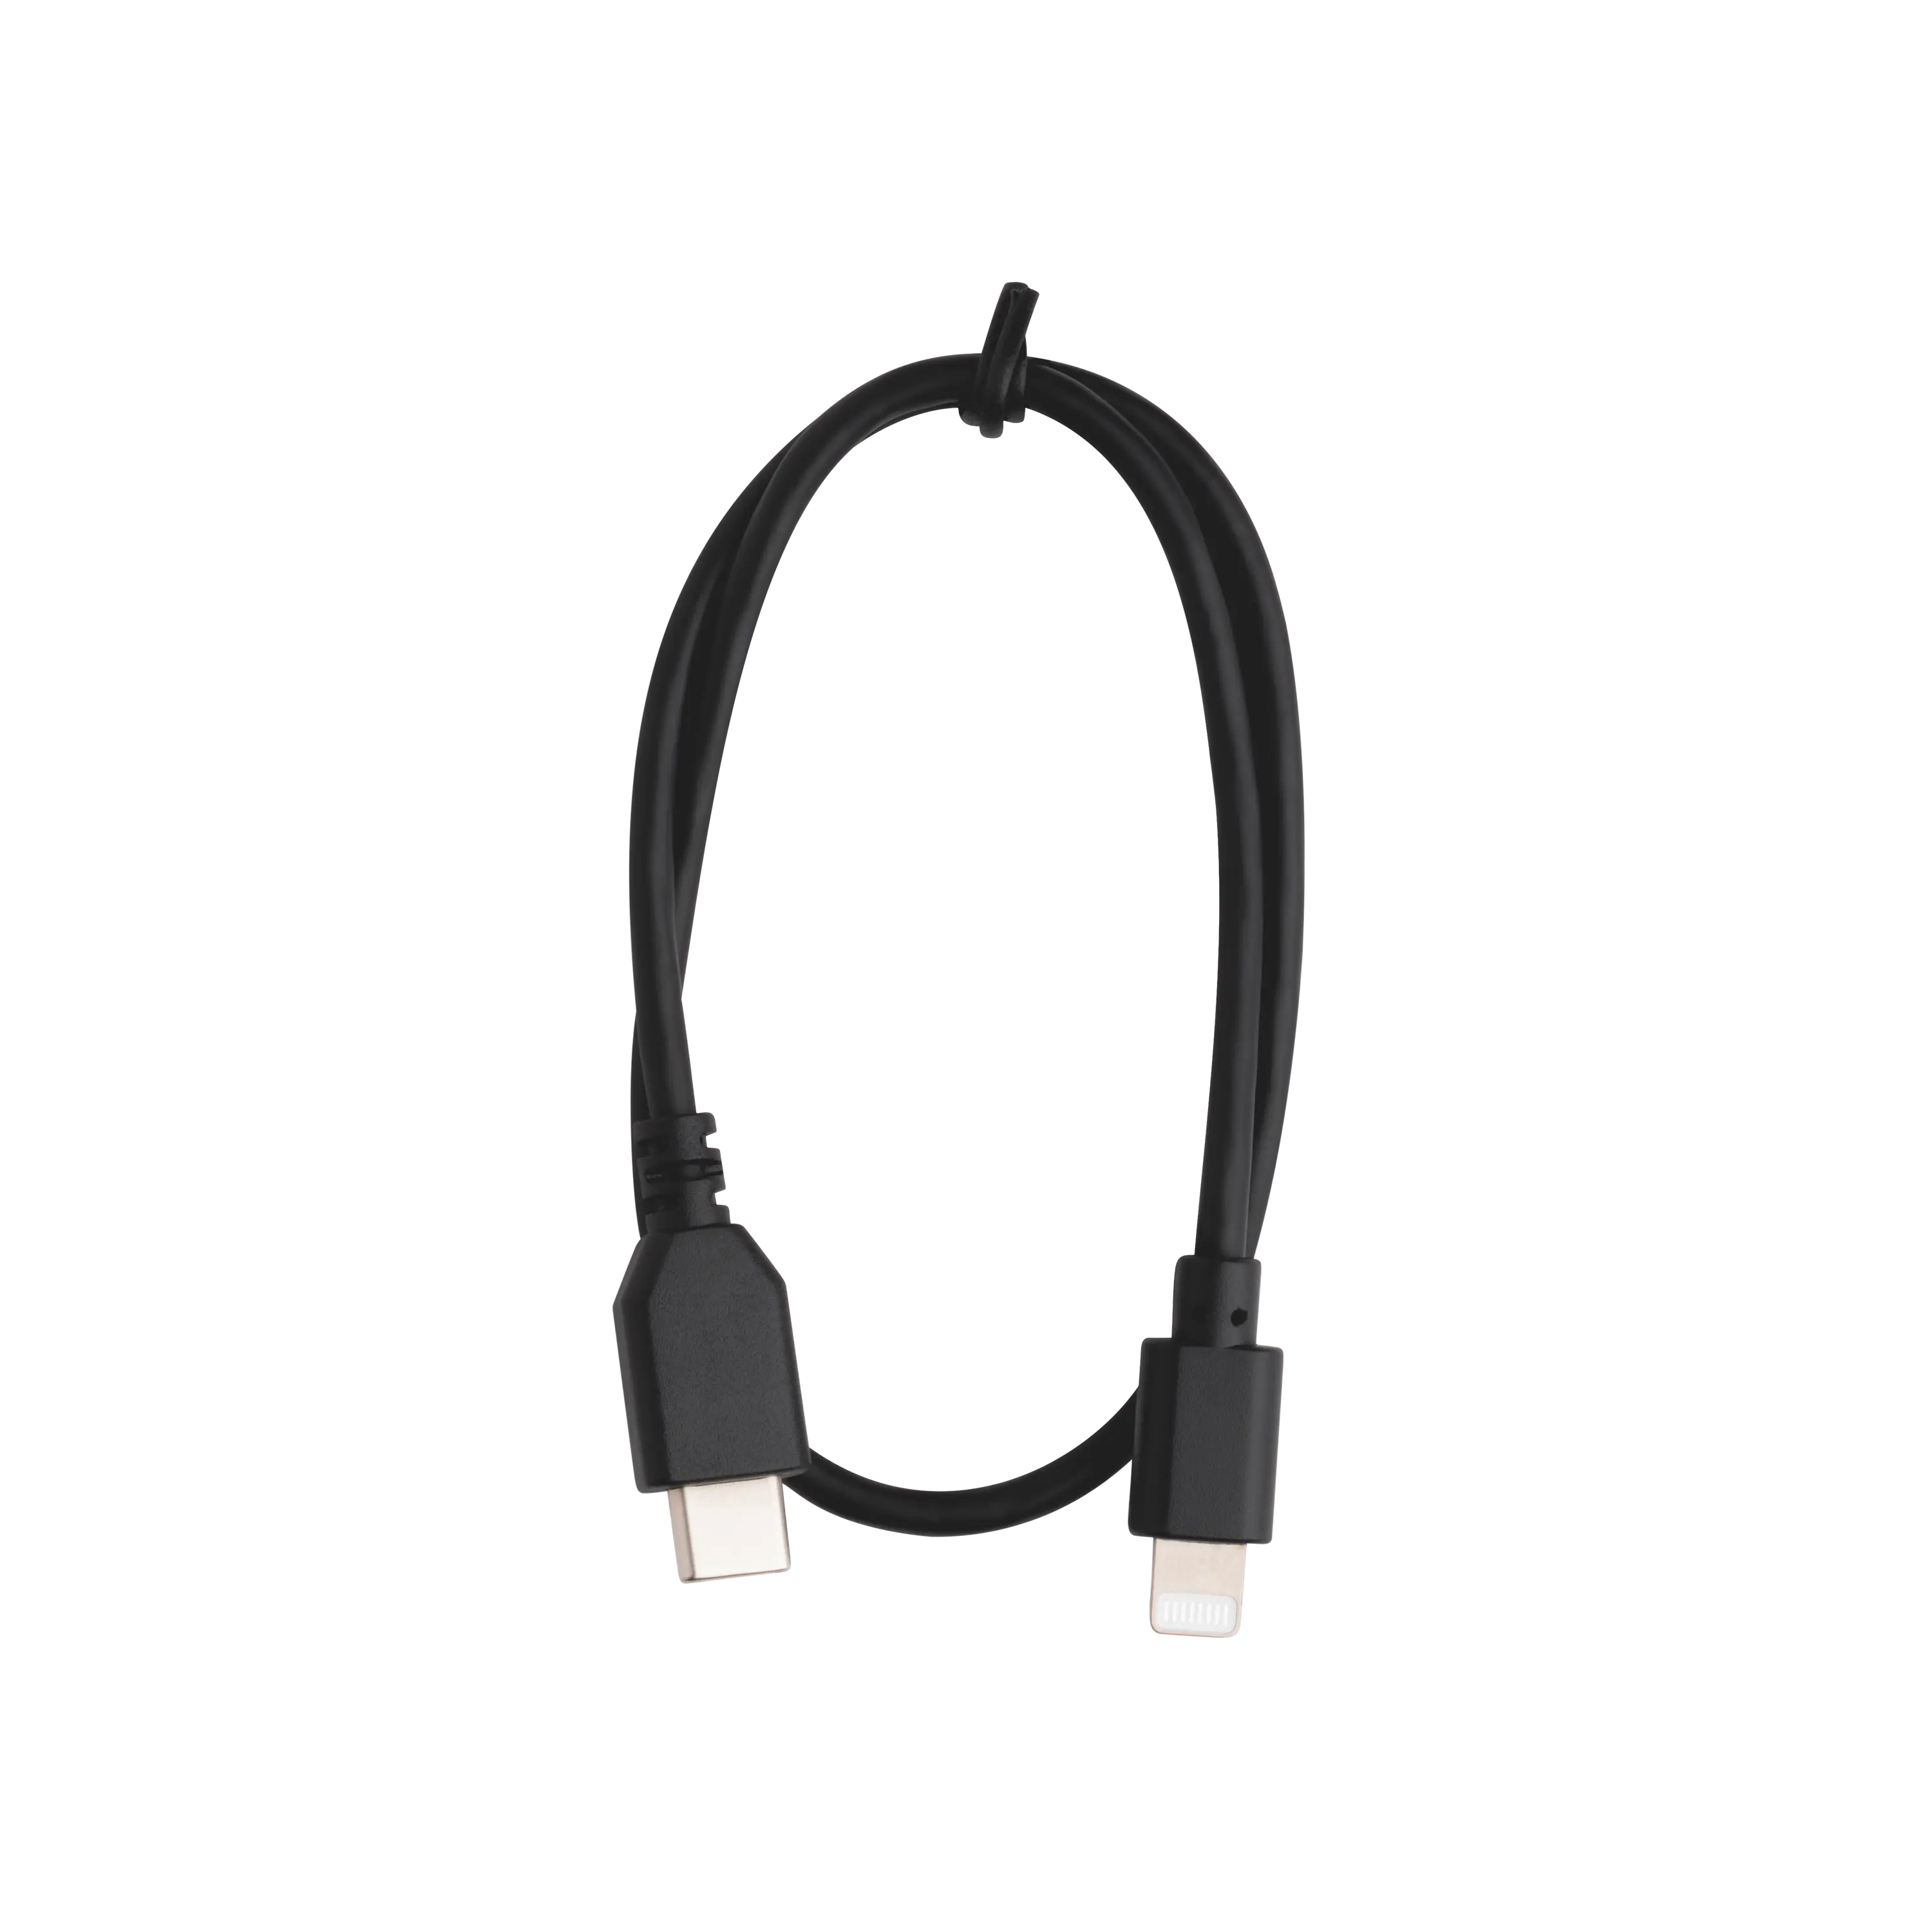 USB-C - Lightning Cable - Shure USA